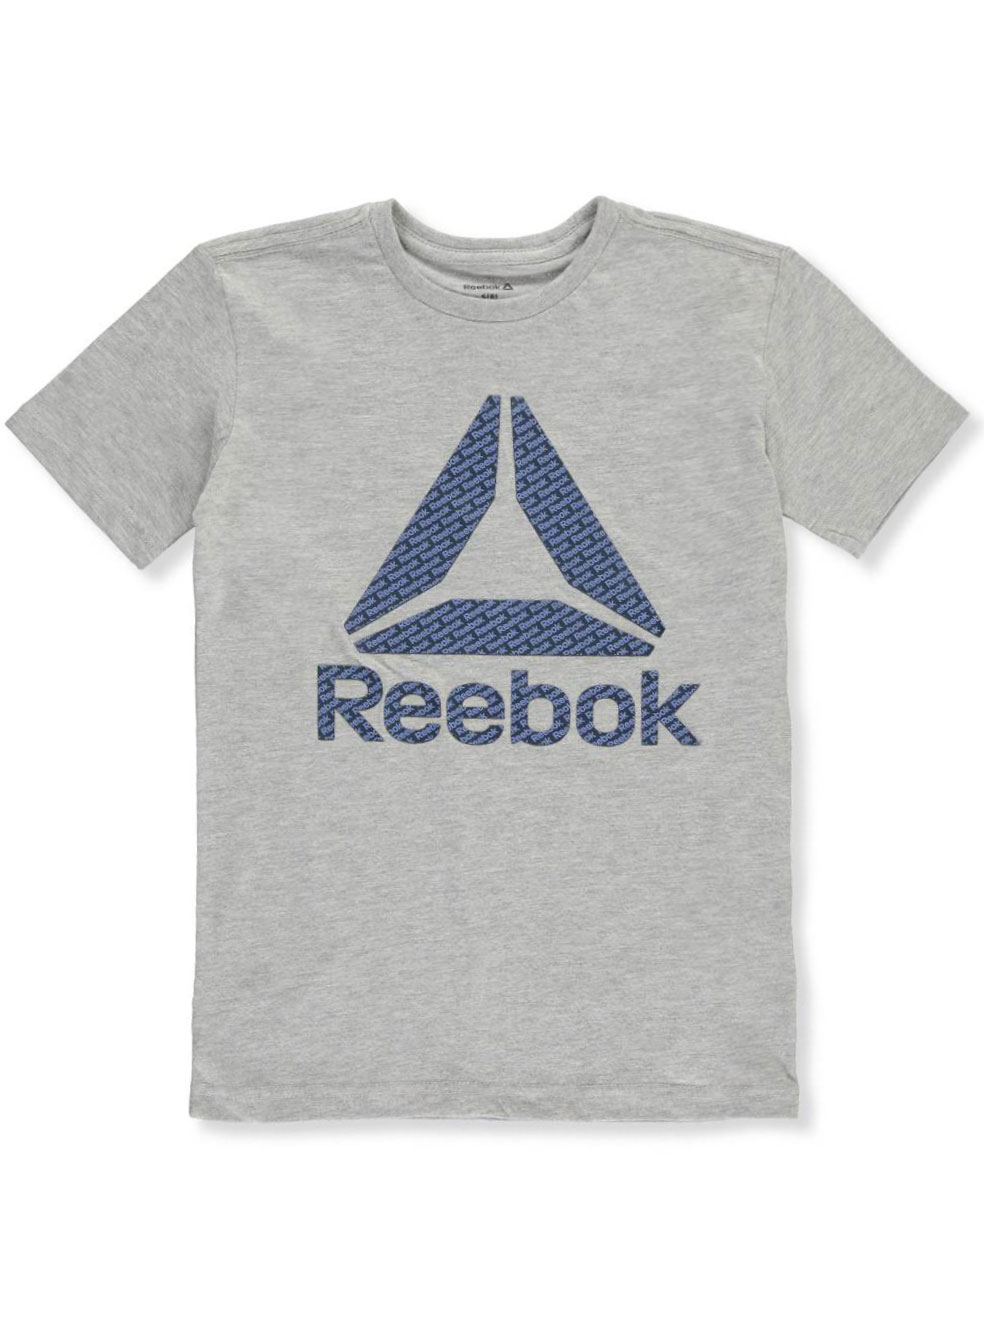 reebok t shirt logo